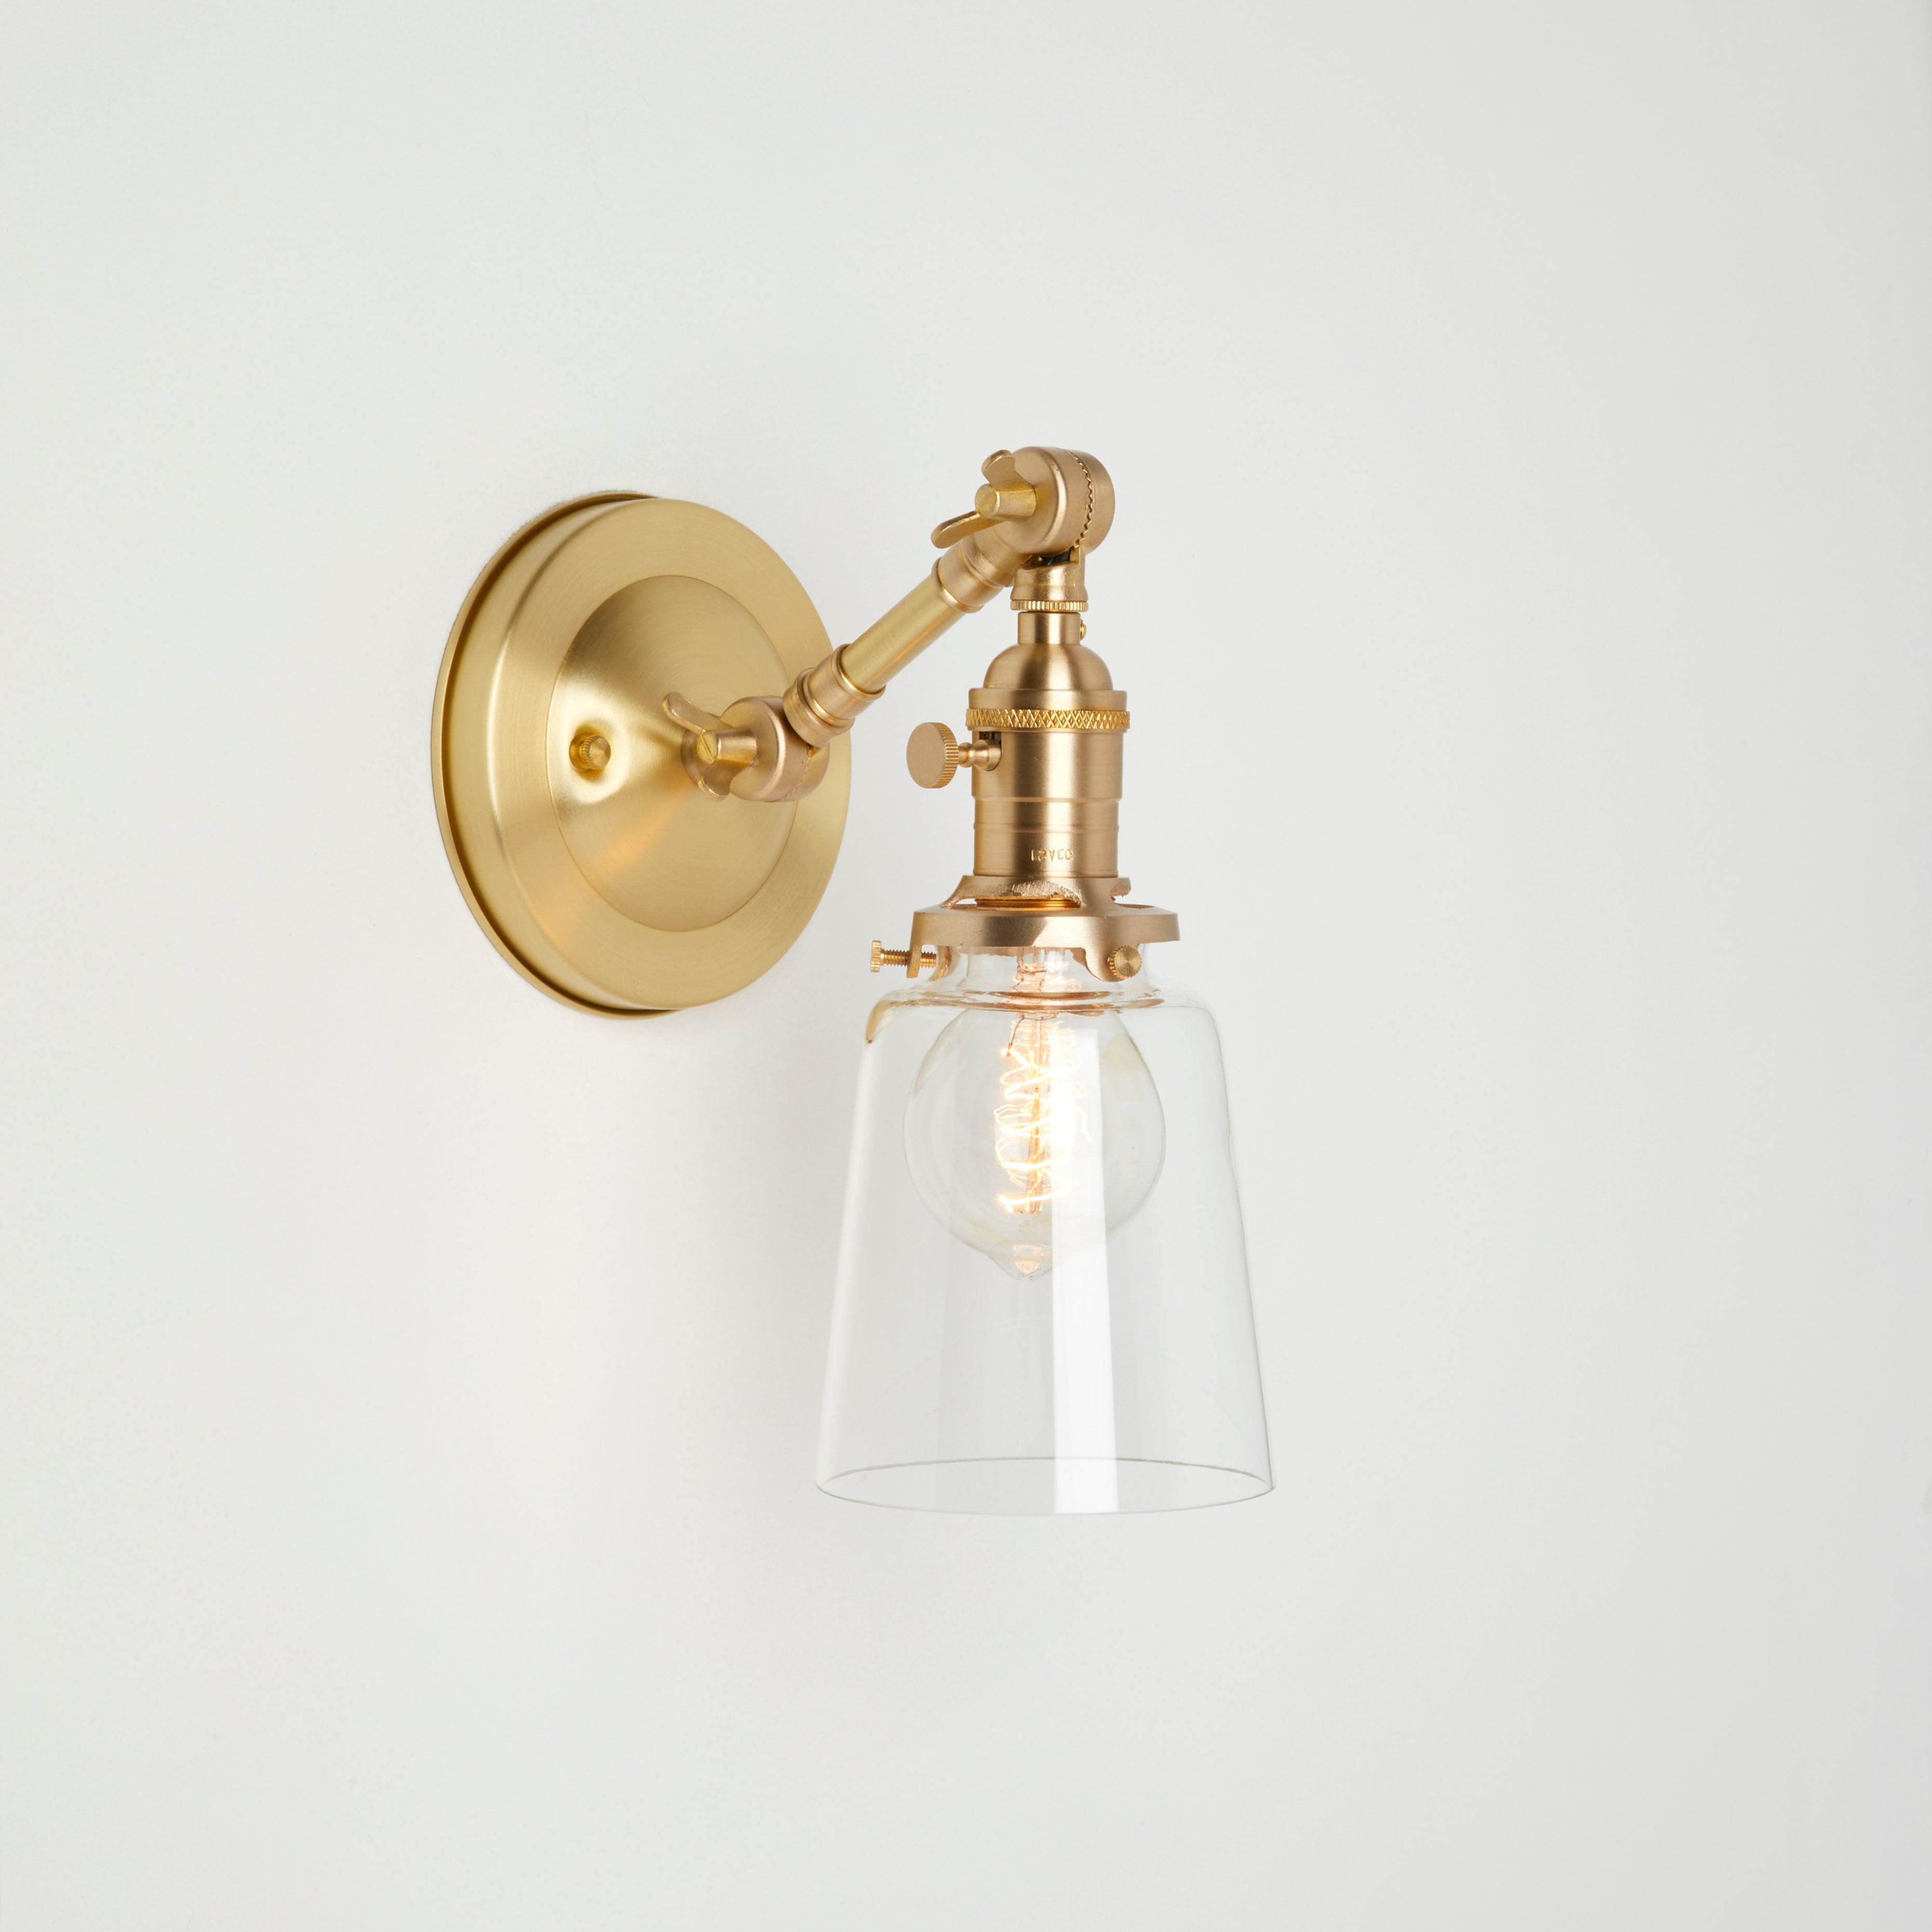 Antique vintage brass lamp spacer light part